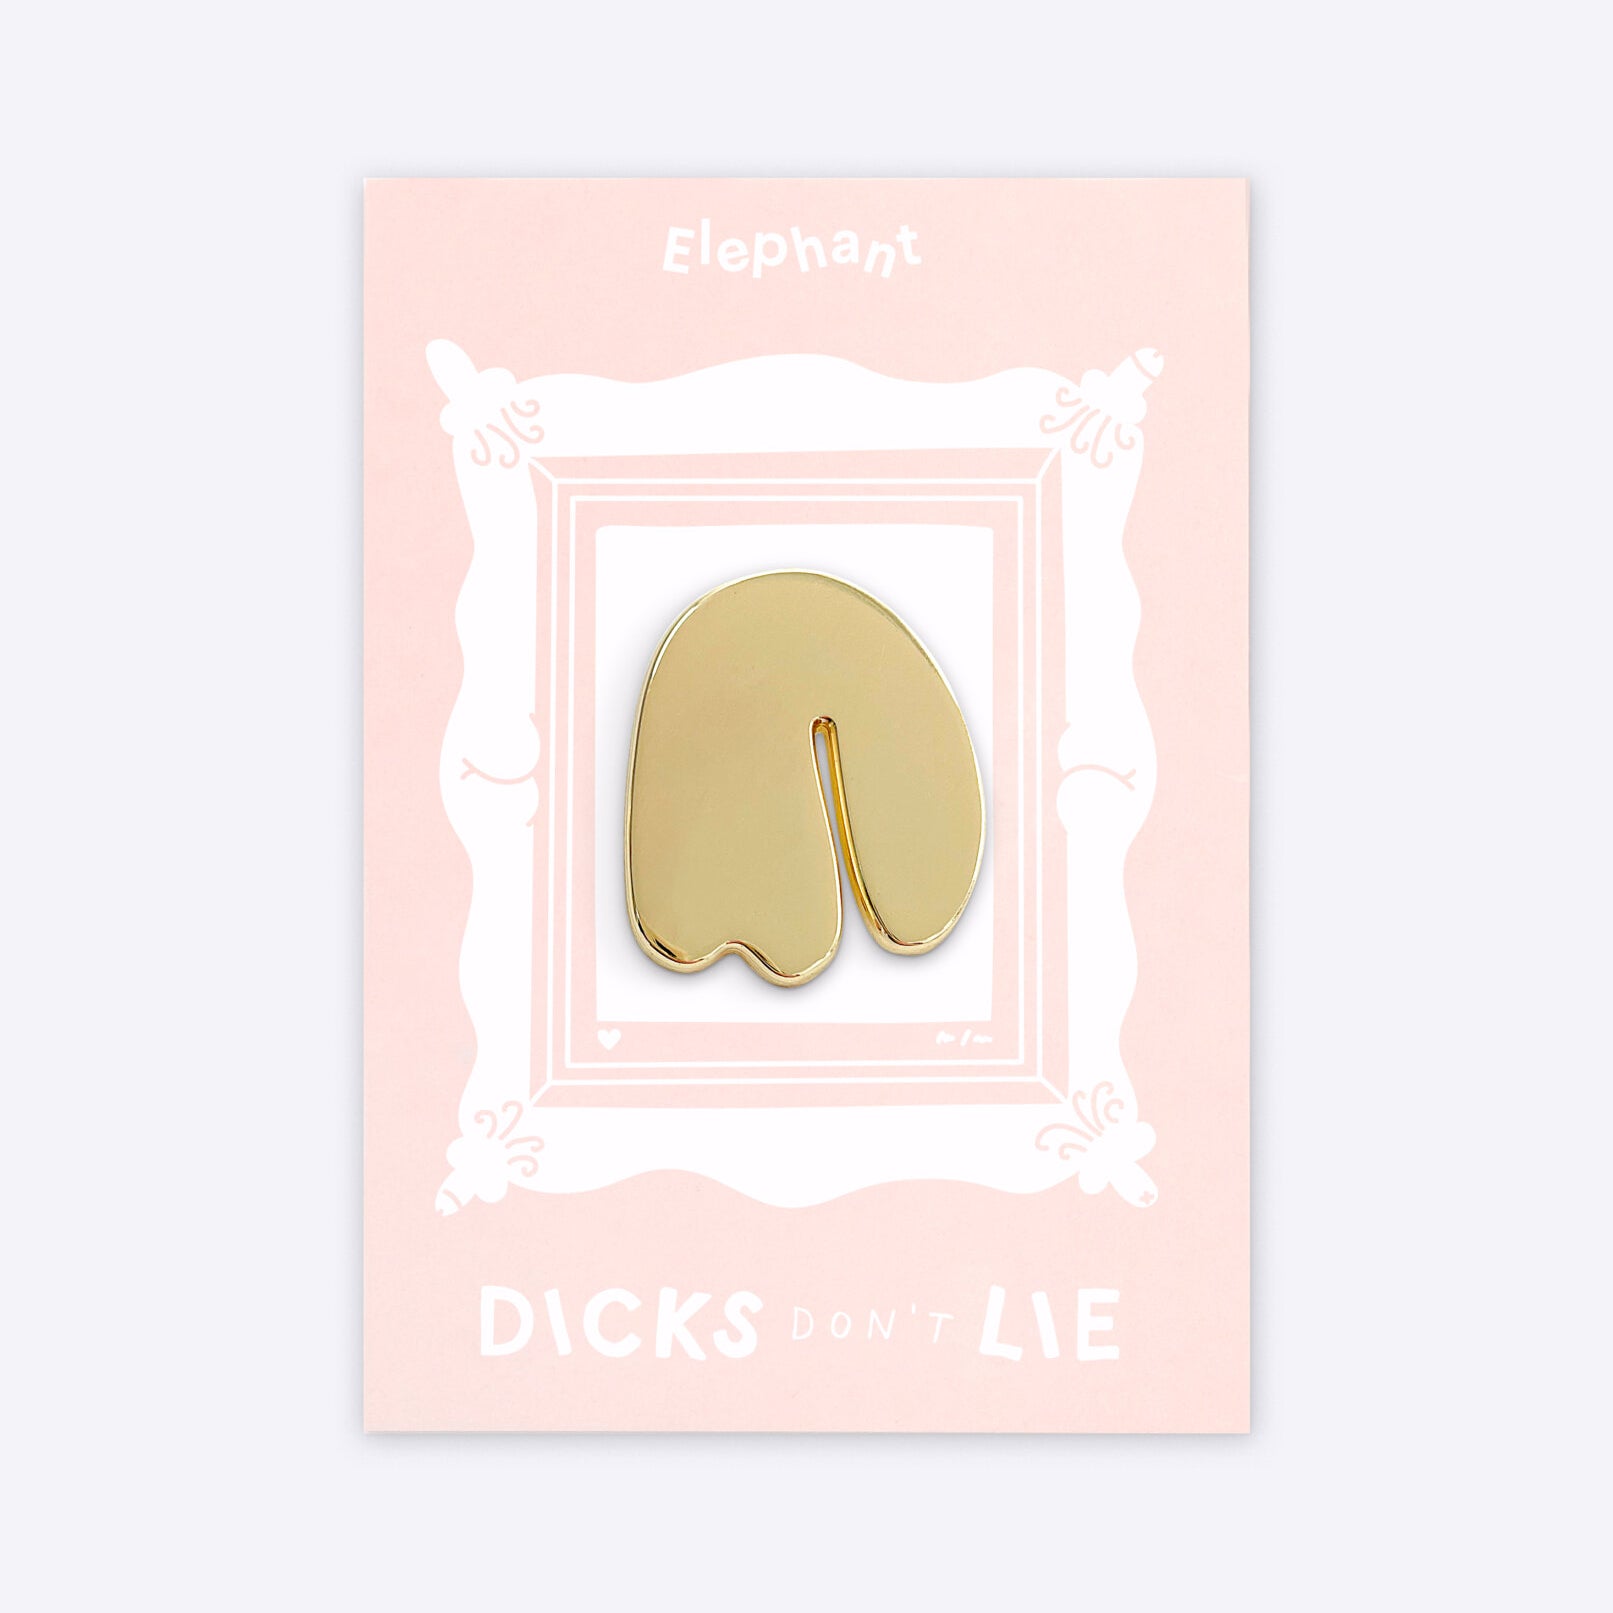 Dicks Don't Lie Elephant - Pin